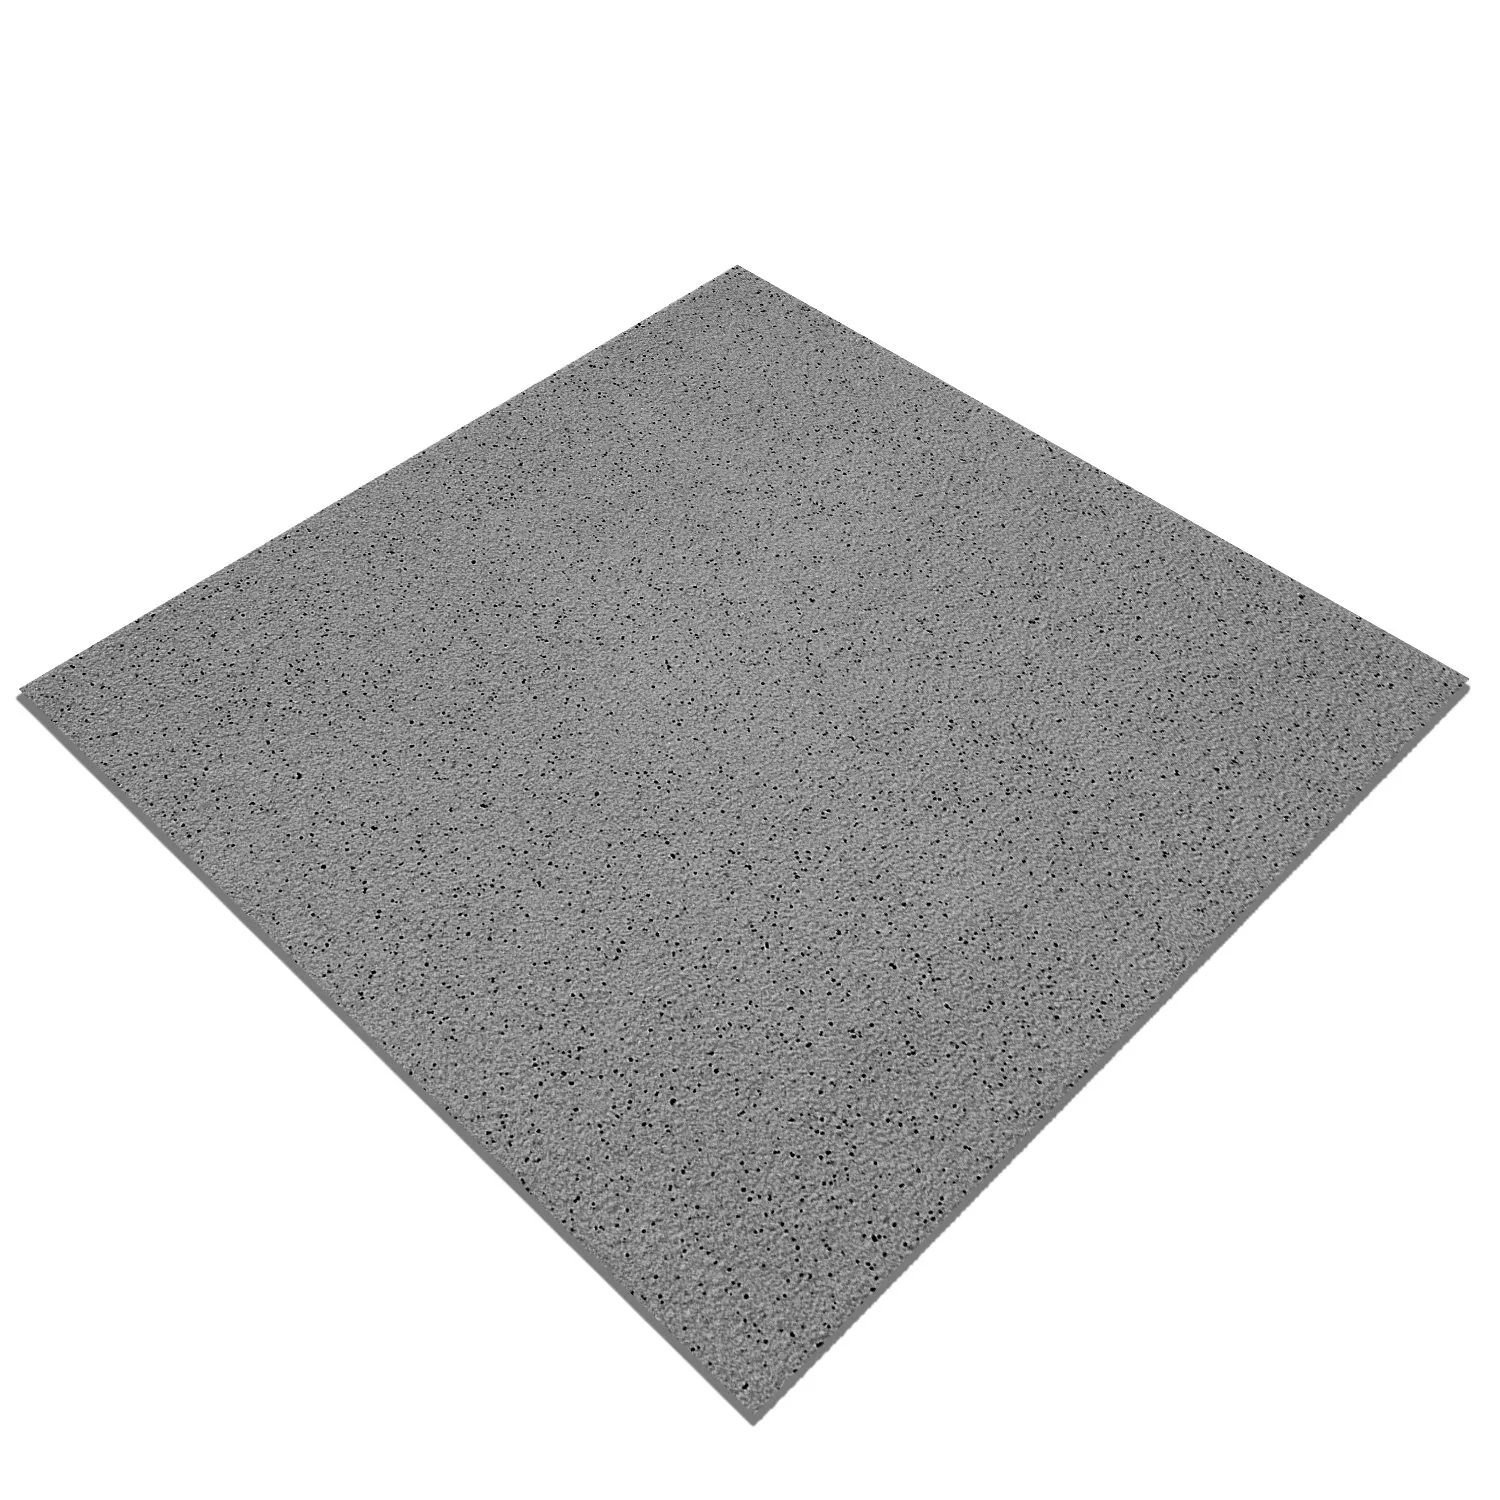 Floor Tiles Fine Grain R11/B Anthracite 15x15cm